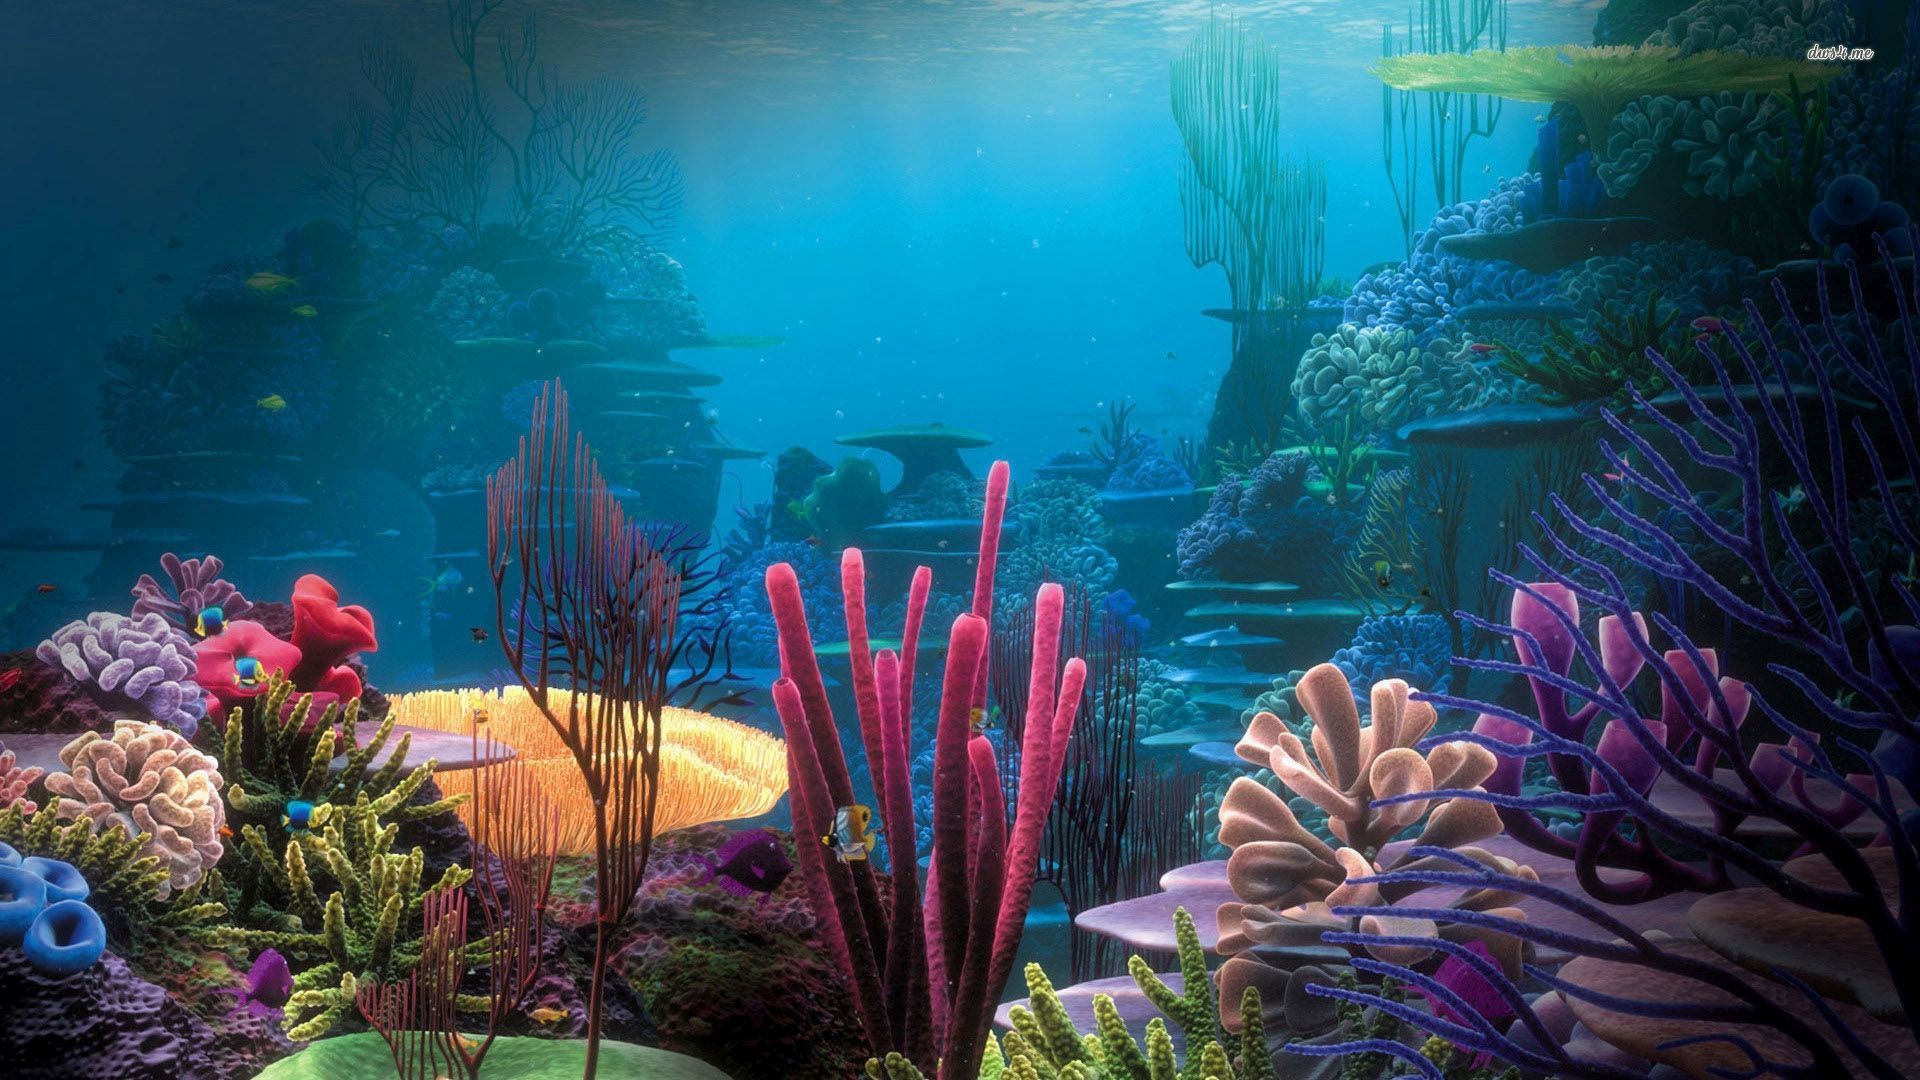 Aquarium 4k uhd 16:9 wallpapers hd, desktop backgrounds 3840x2160, images  and pictures